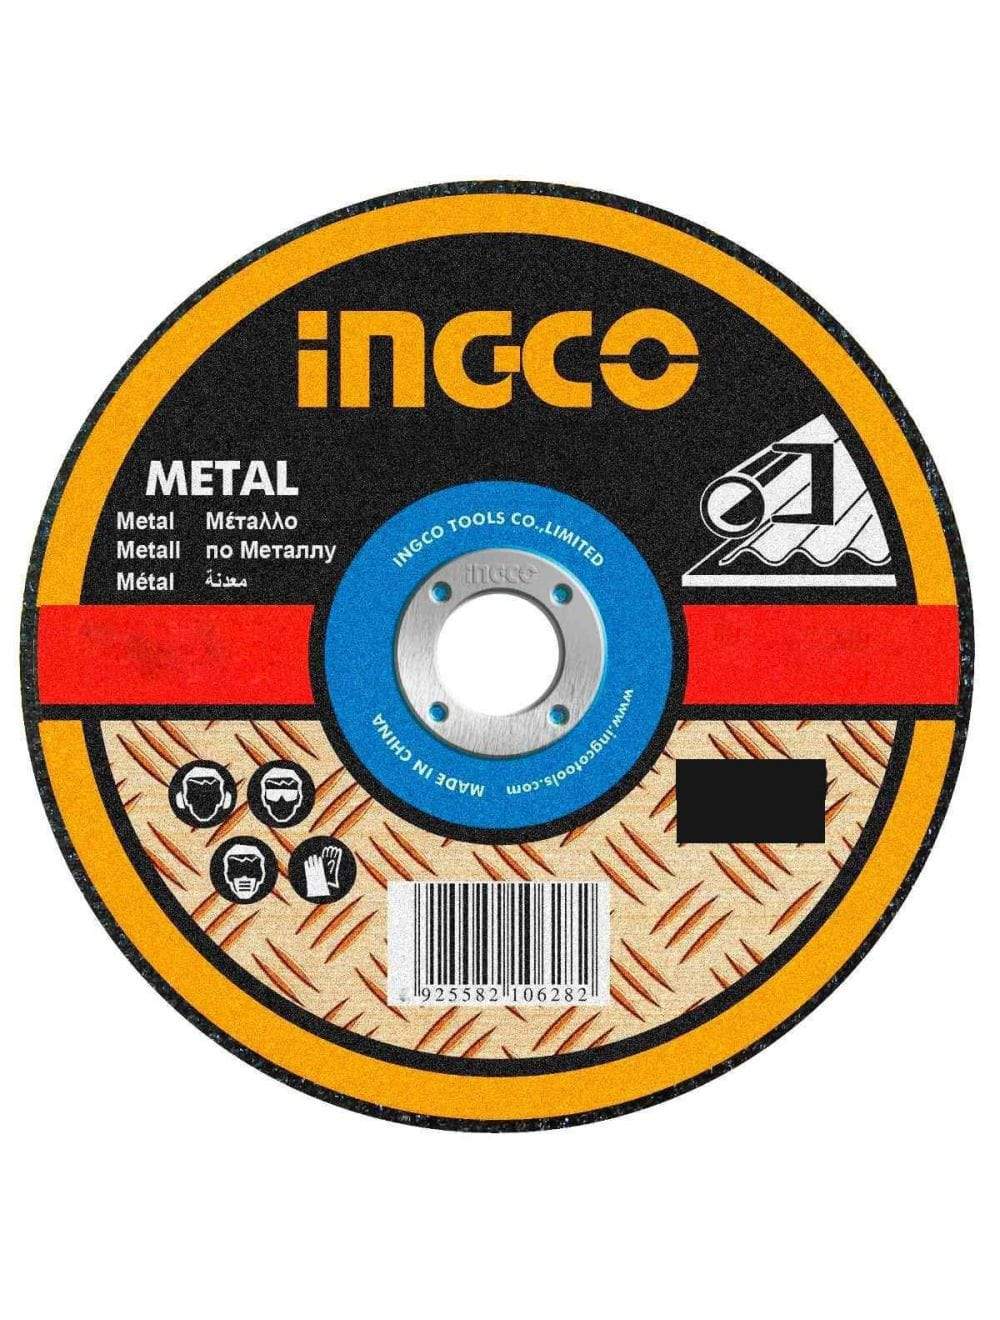 Ingco Abrasive Metal Grinding Disc | Supply Master | Accra, Ghana Tools Building Steel Engineering Hardware tool